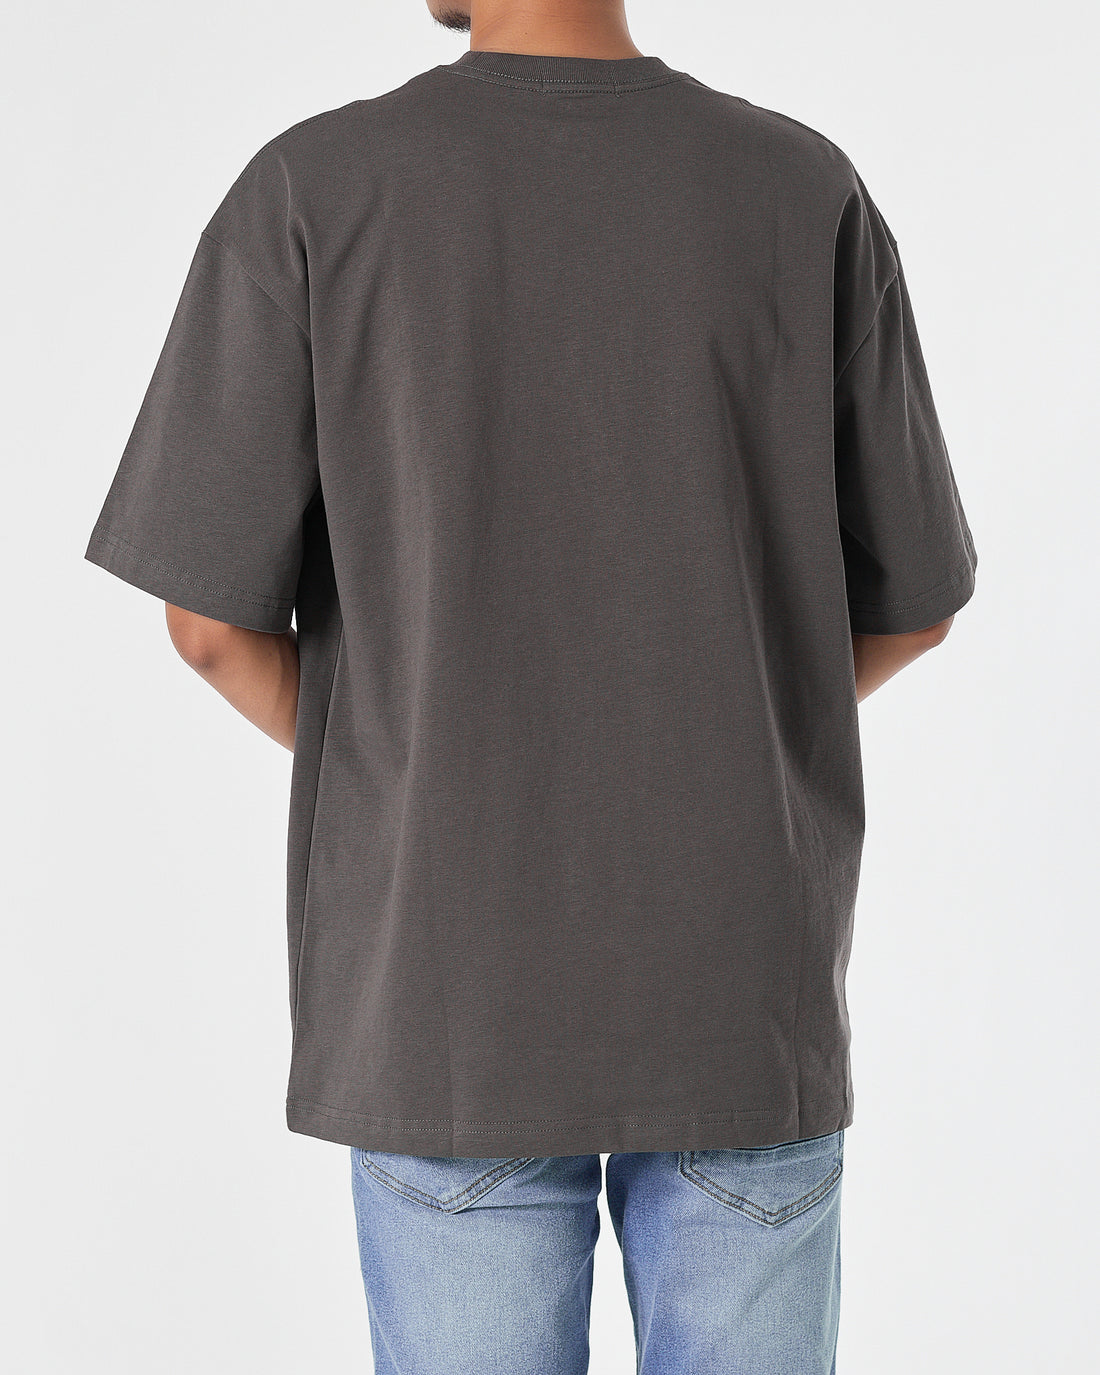 CEL Logo Printed Men Dark Grey T-Shirt 17.90